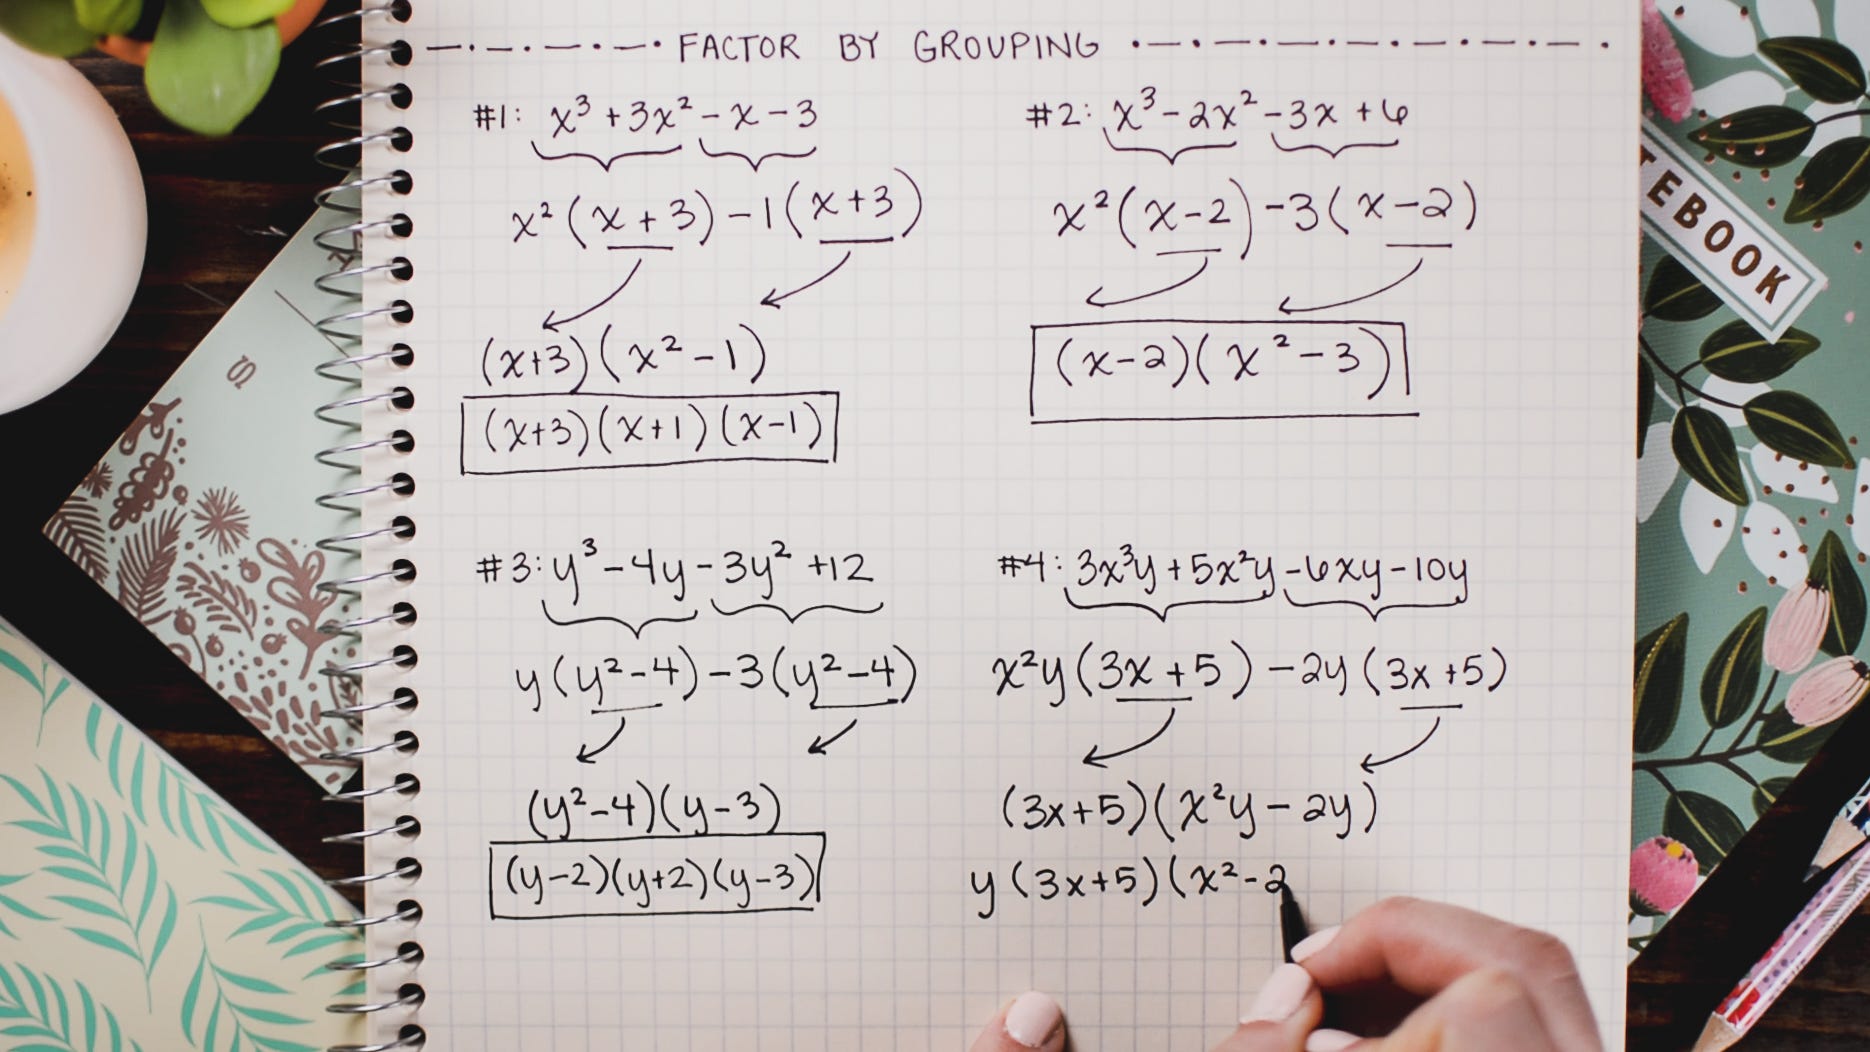 starter-guide-to-factoring-quadratics-polynomials-by-brett-berry-math-hacks-medium